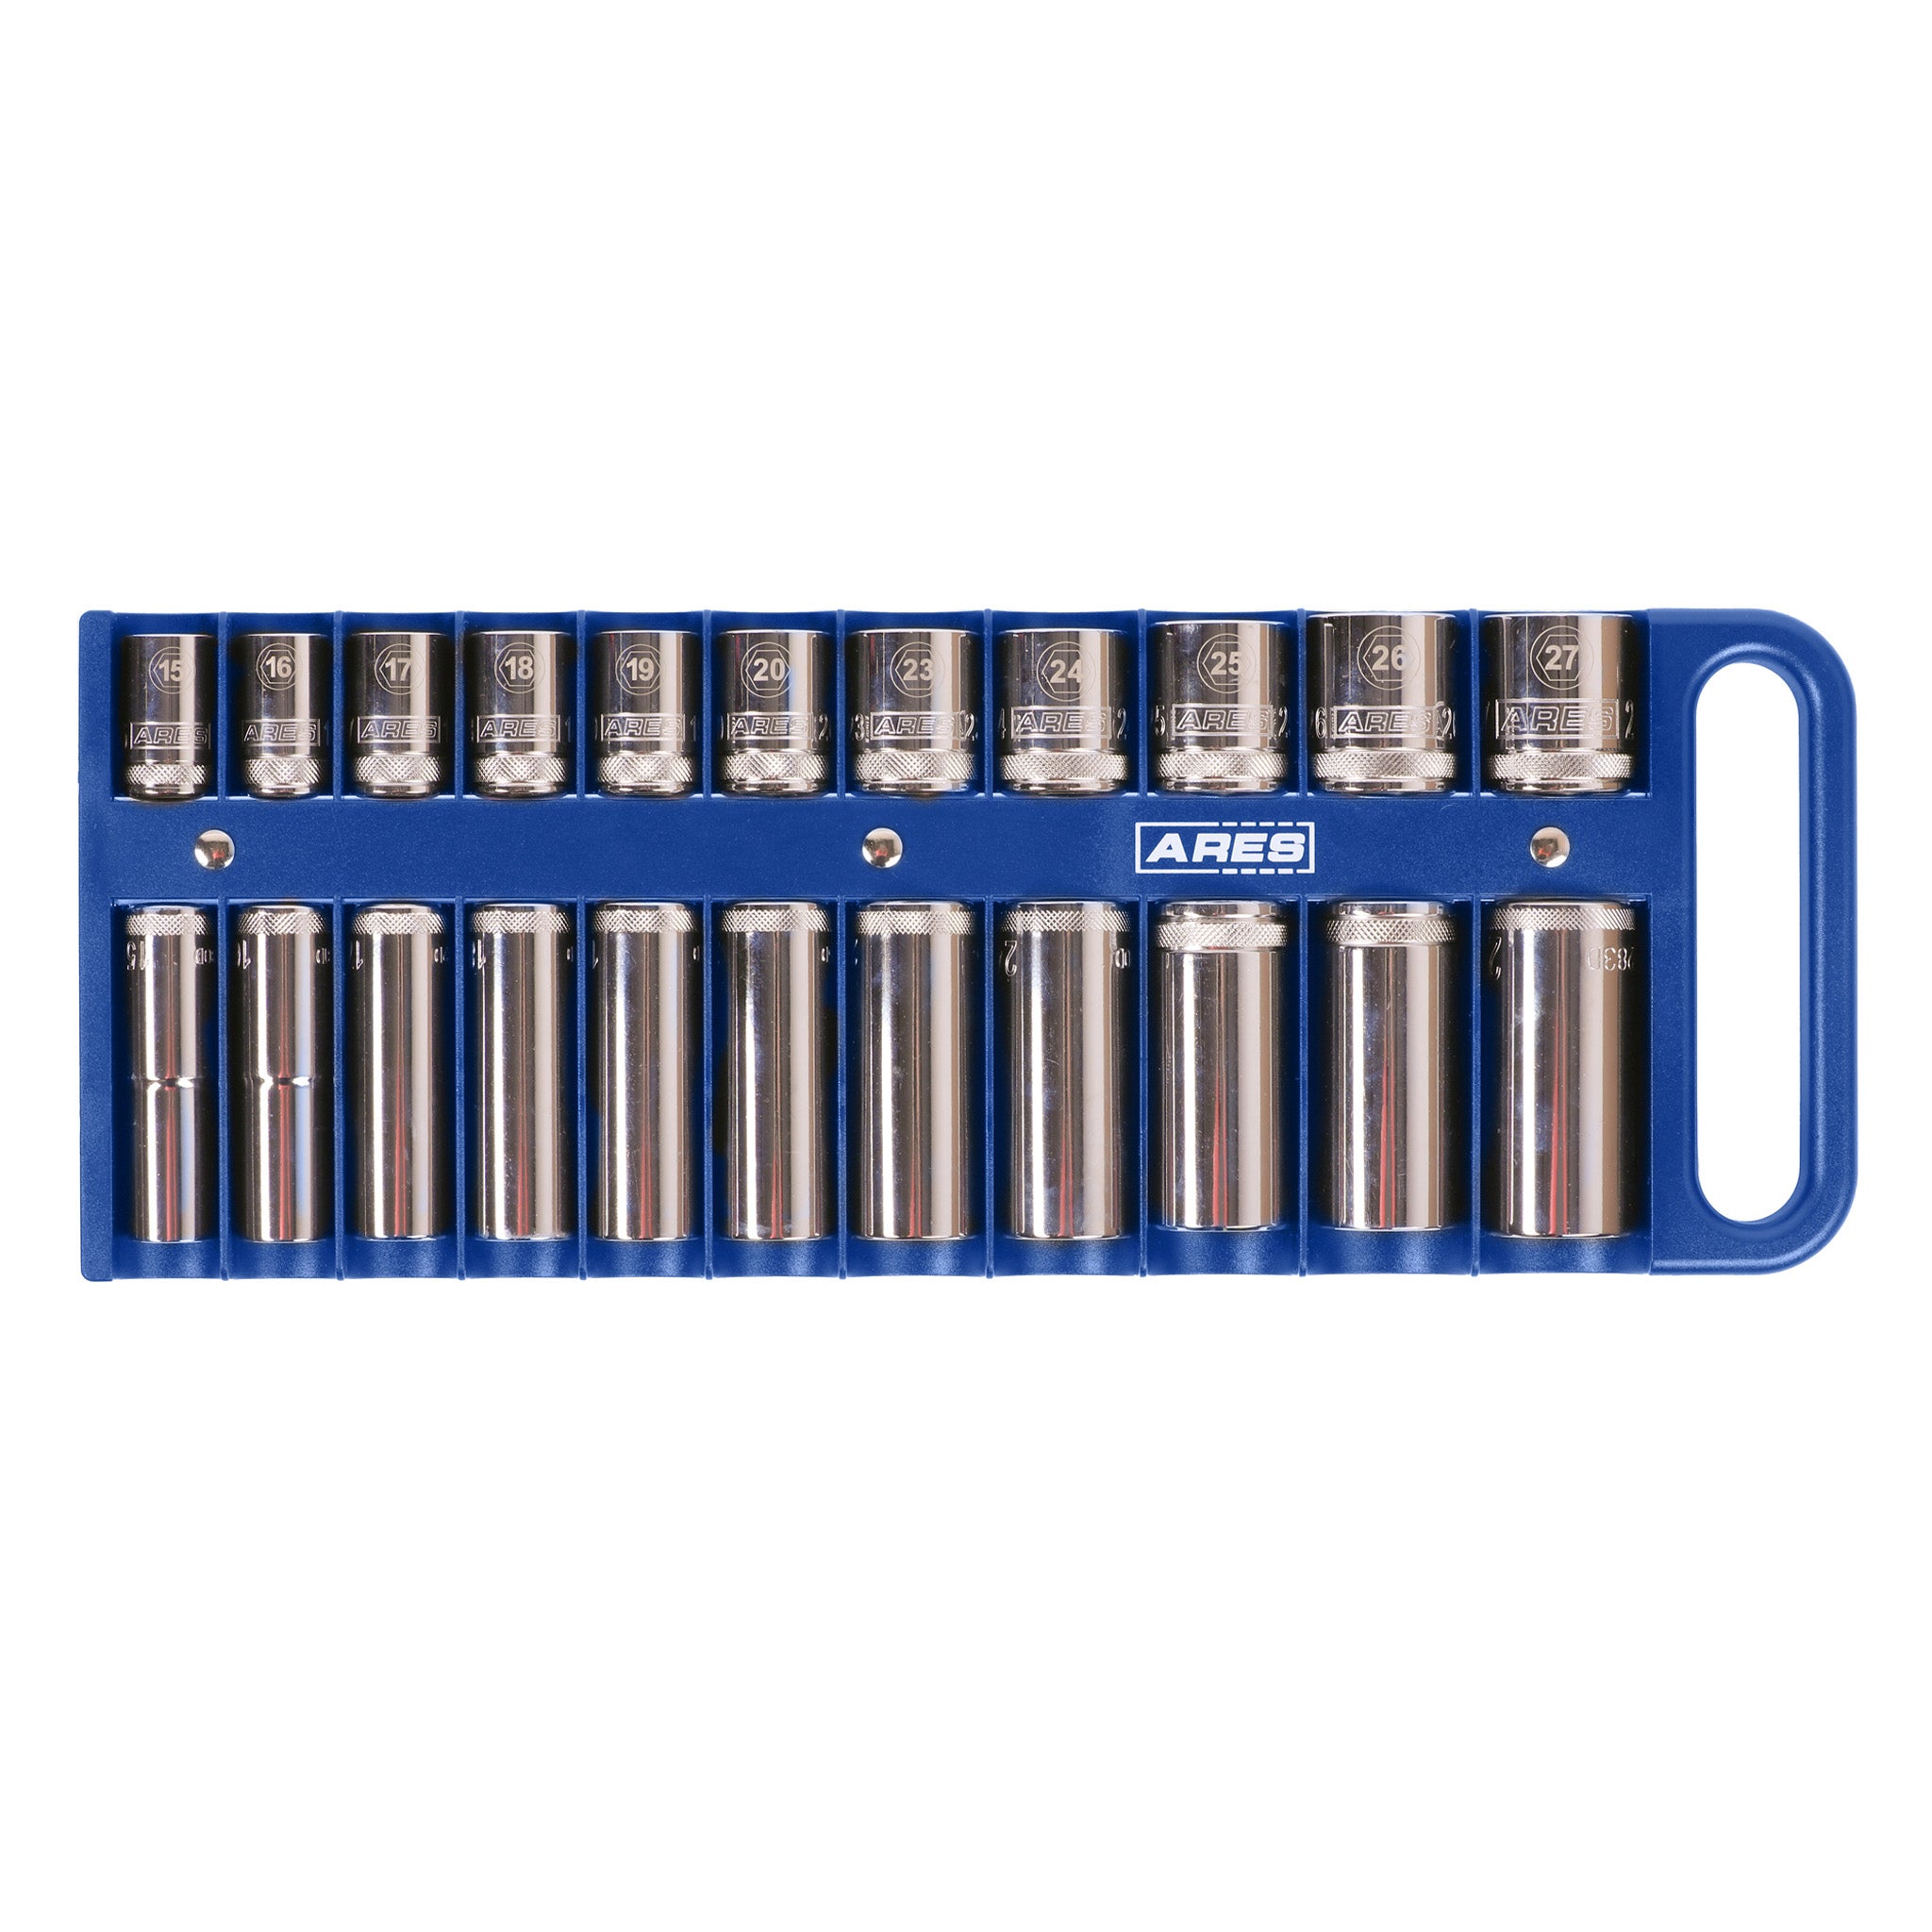 Taj Tools 1 By 2 Drive Metric Magnetic Socket Holder Tool Organizer Tray -  Blue, Holds 18 Sockets And 1 Socket Adaptor